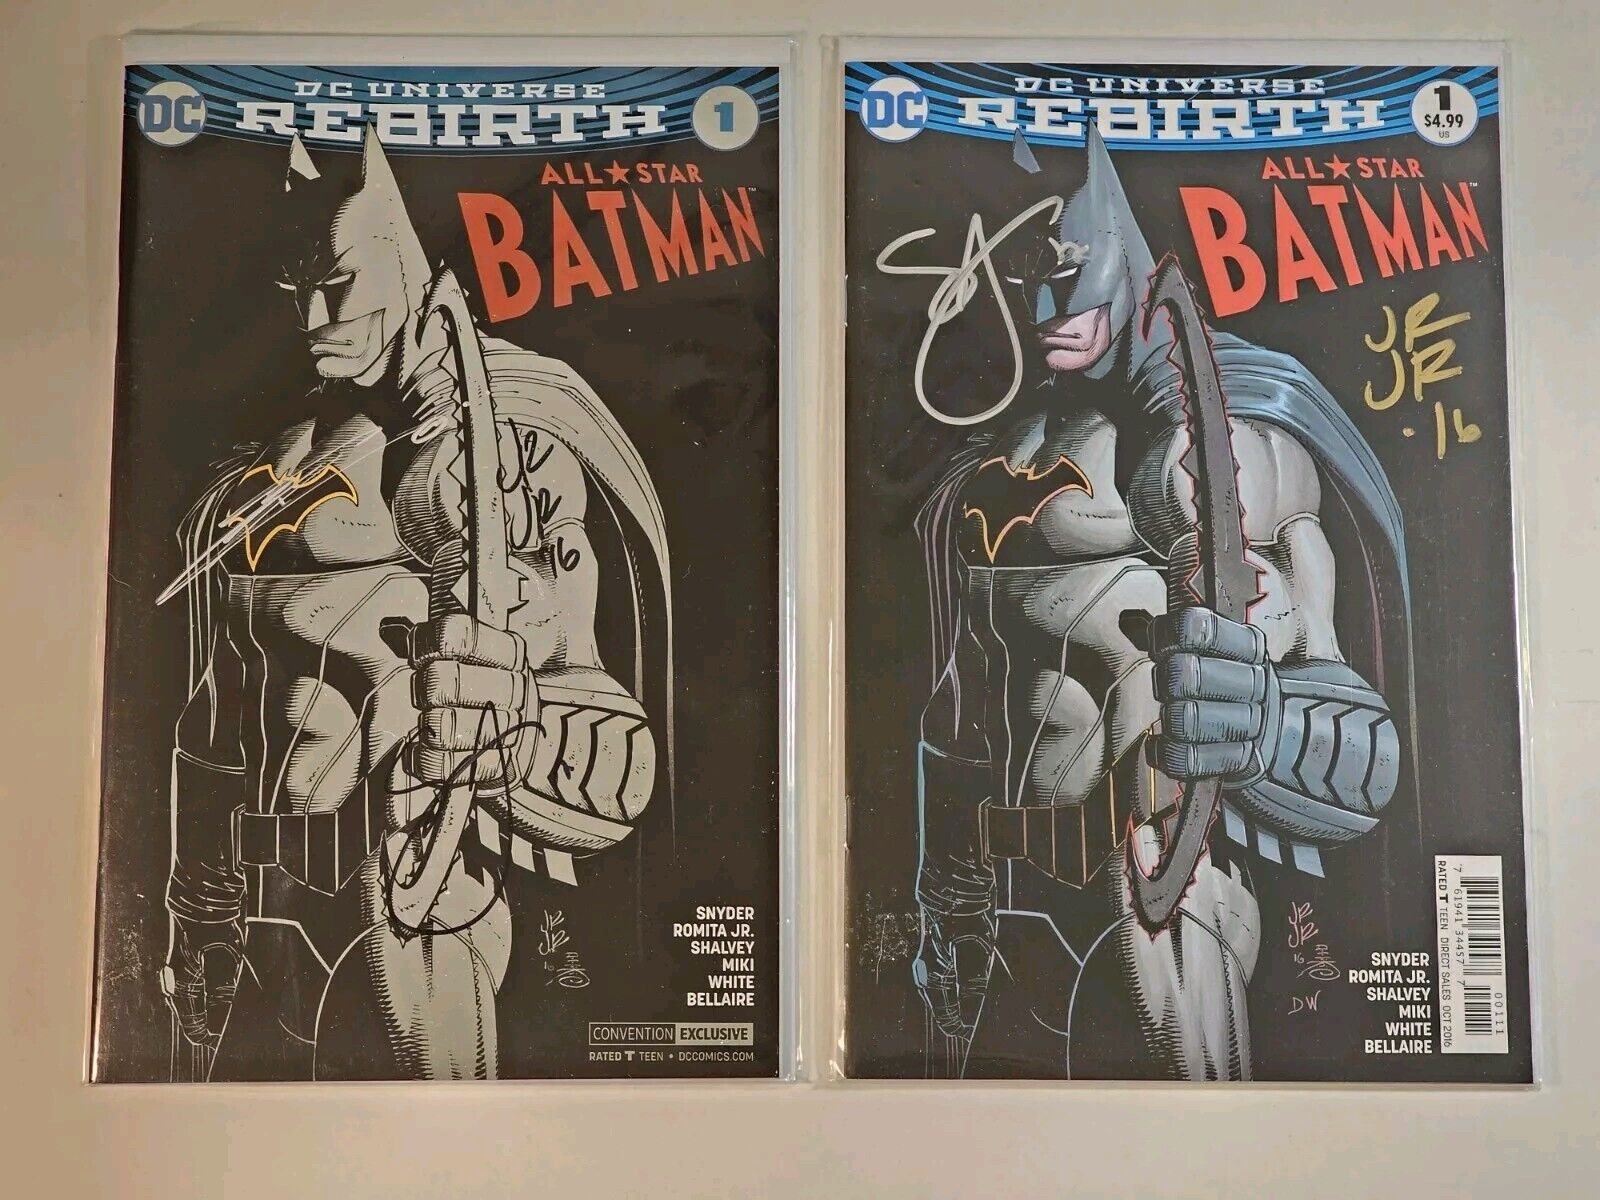 All Star Batman #1 A Cover 2x Signed And Foil Variant 3x Signed no COAs